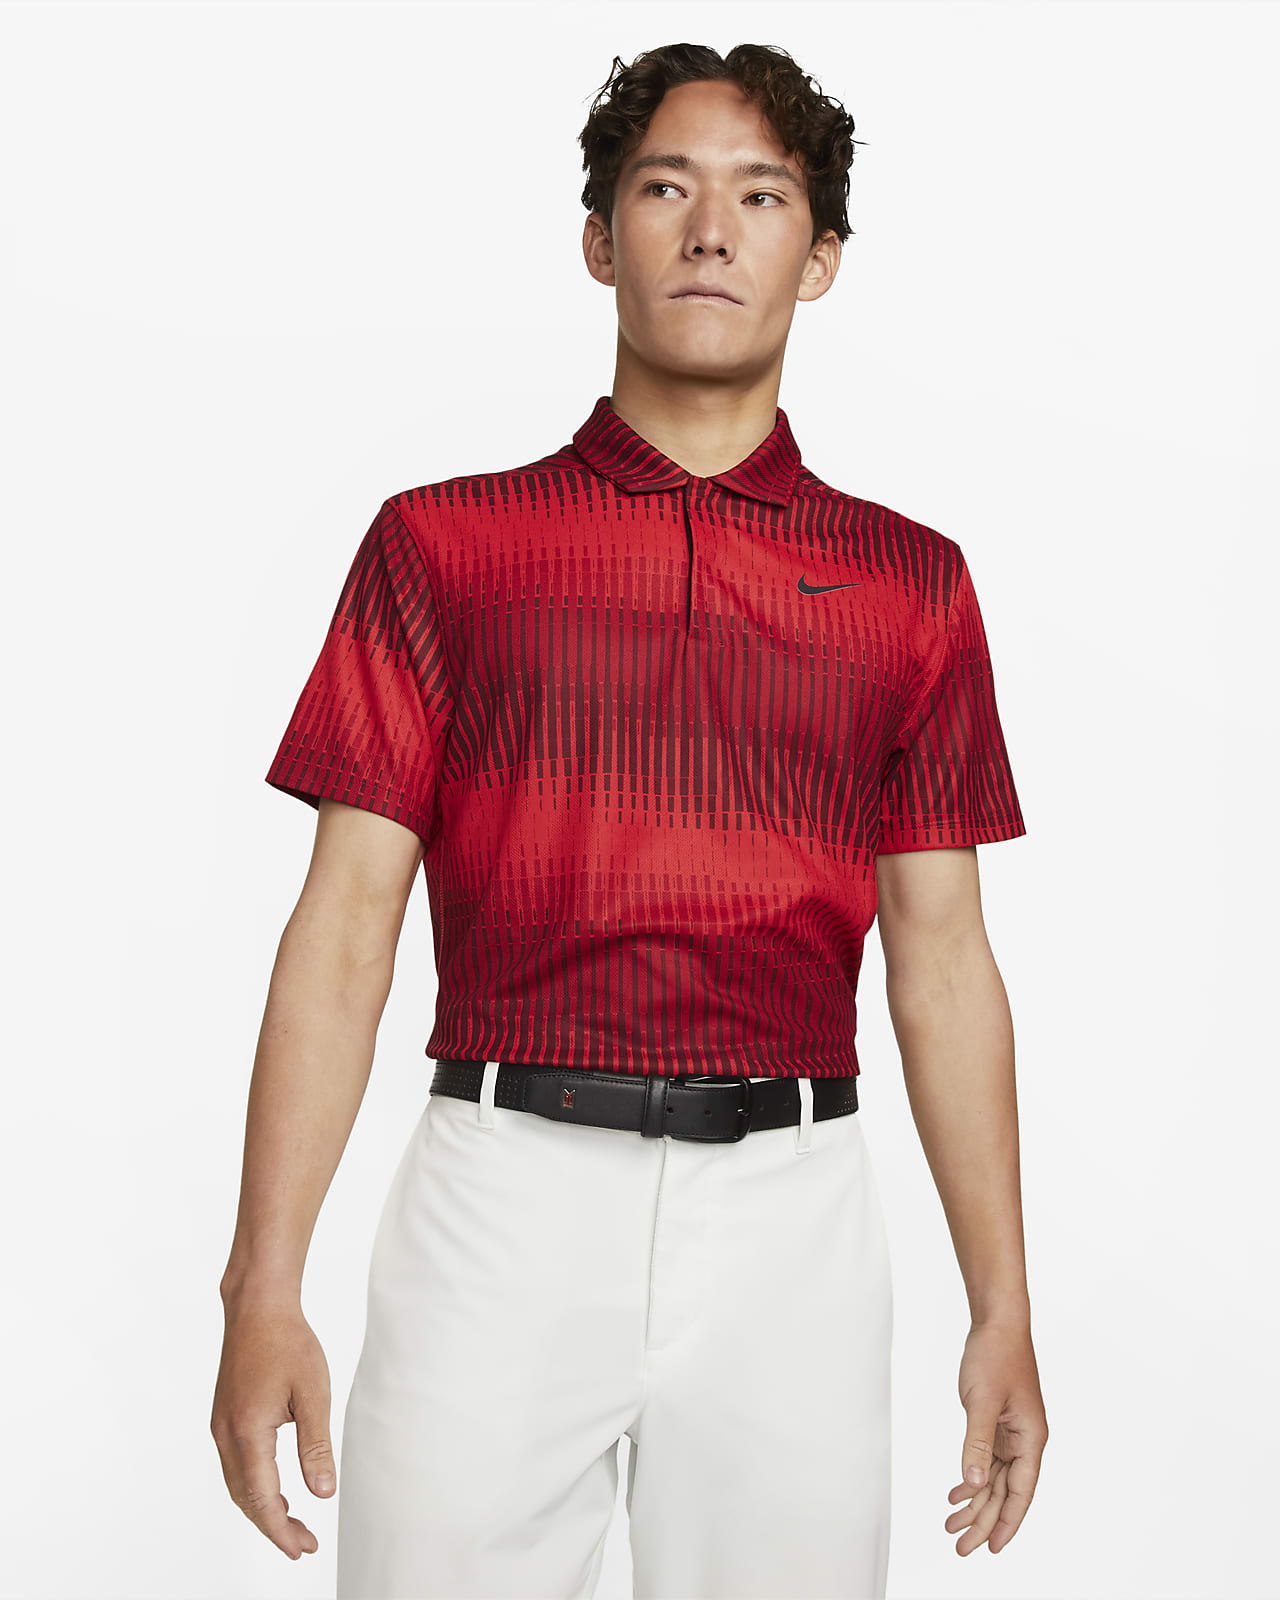 Nike Dri-FIT ADV Tiger Woods Polo de golf - Home